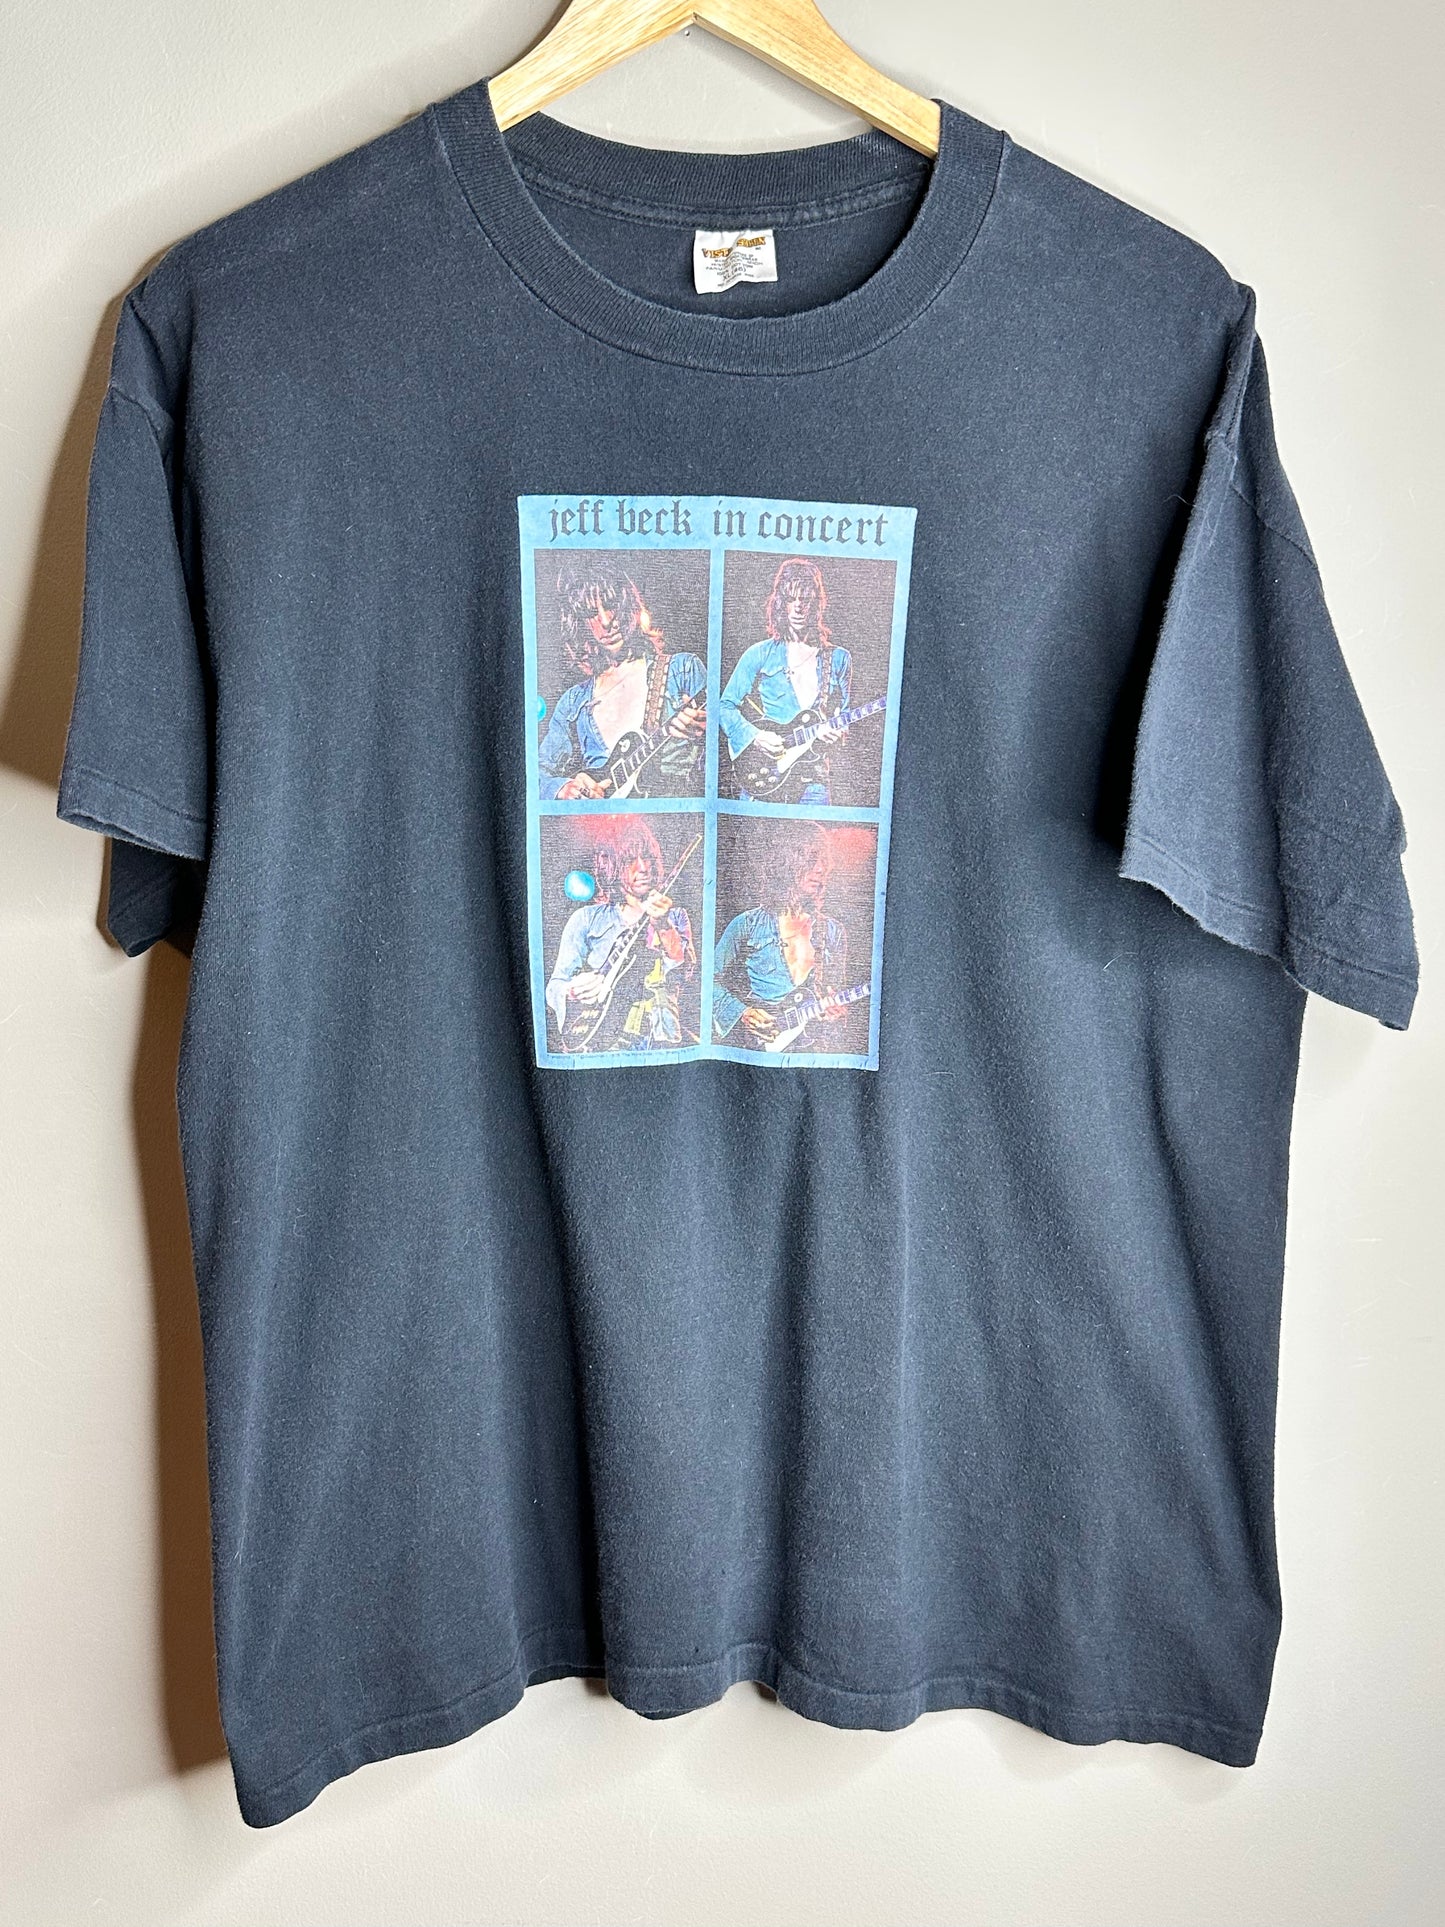 Vintage 1975 Jeff Beck in Concert t-shirt XL